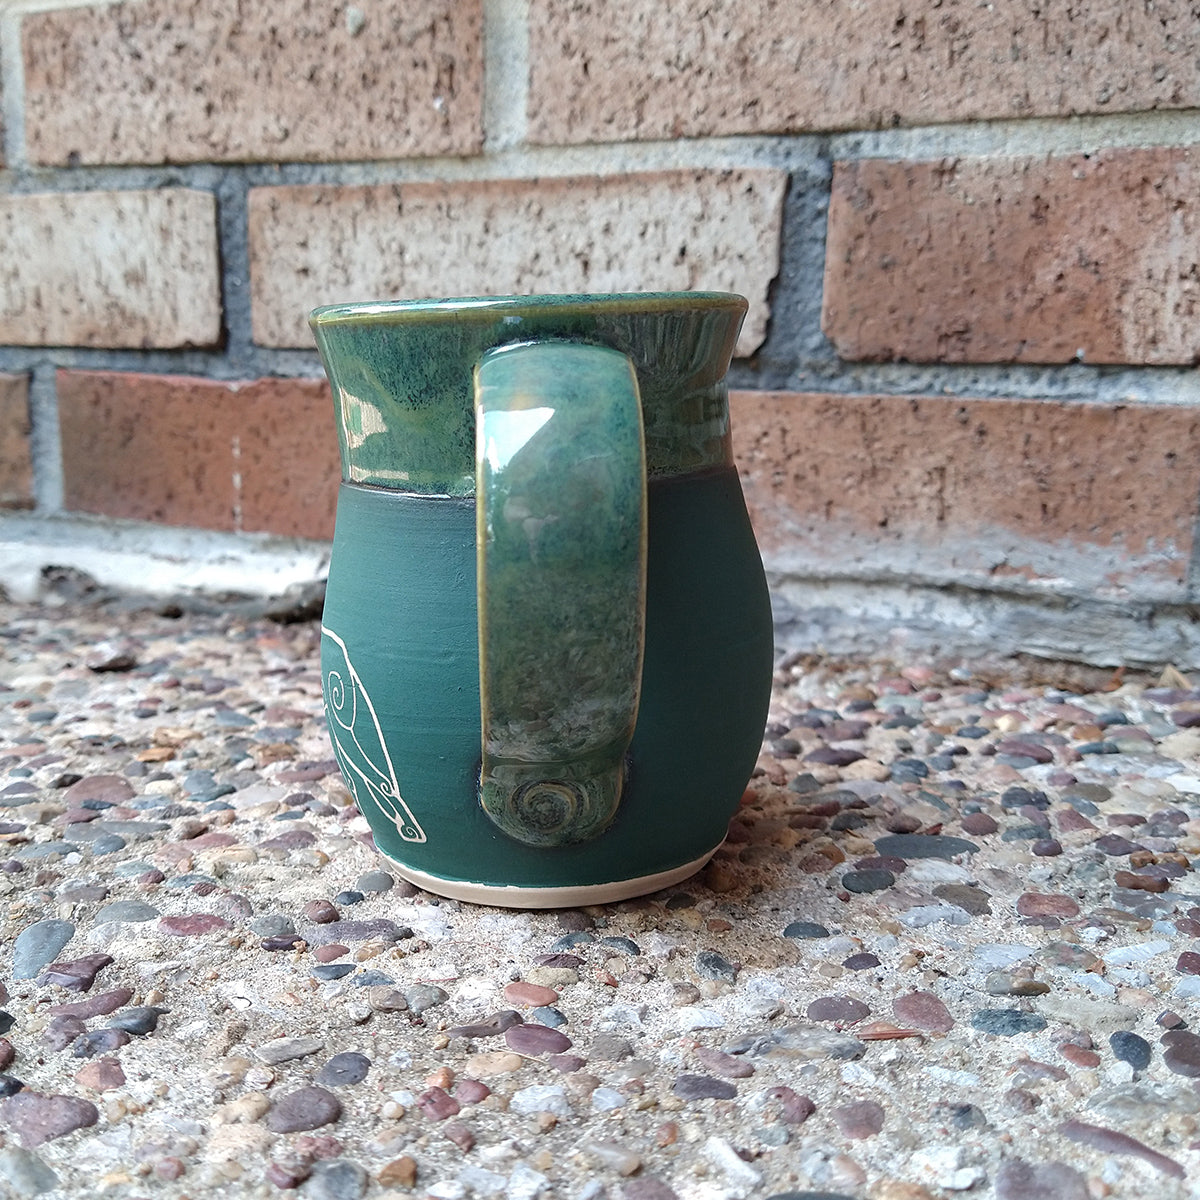 Small Celtic Wolf Mug - 12 oz - Green - SECOND